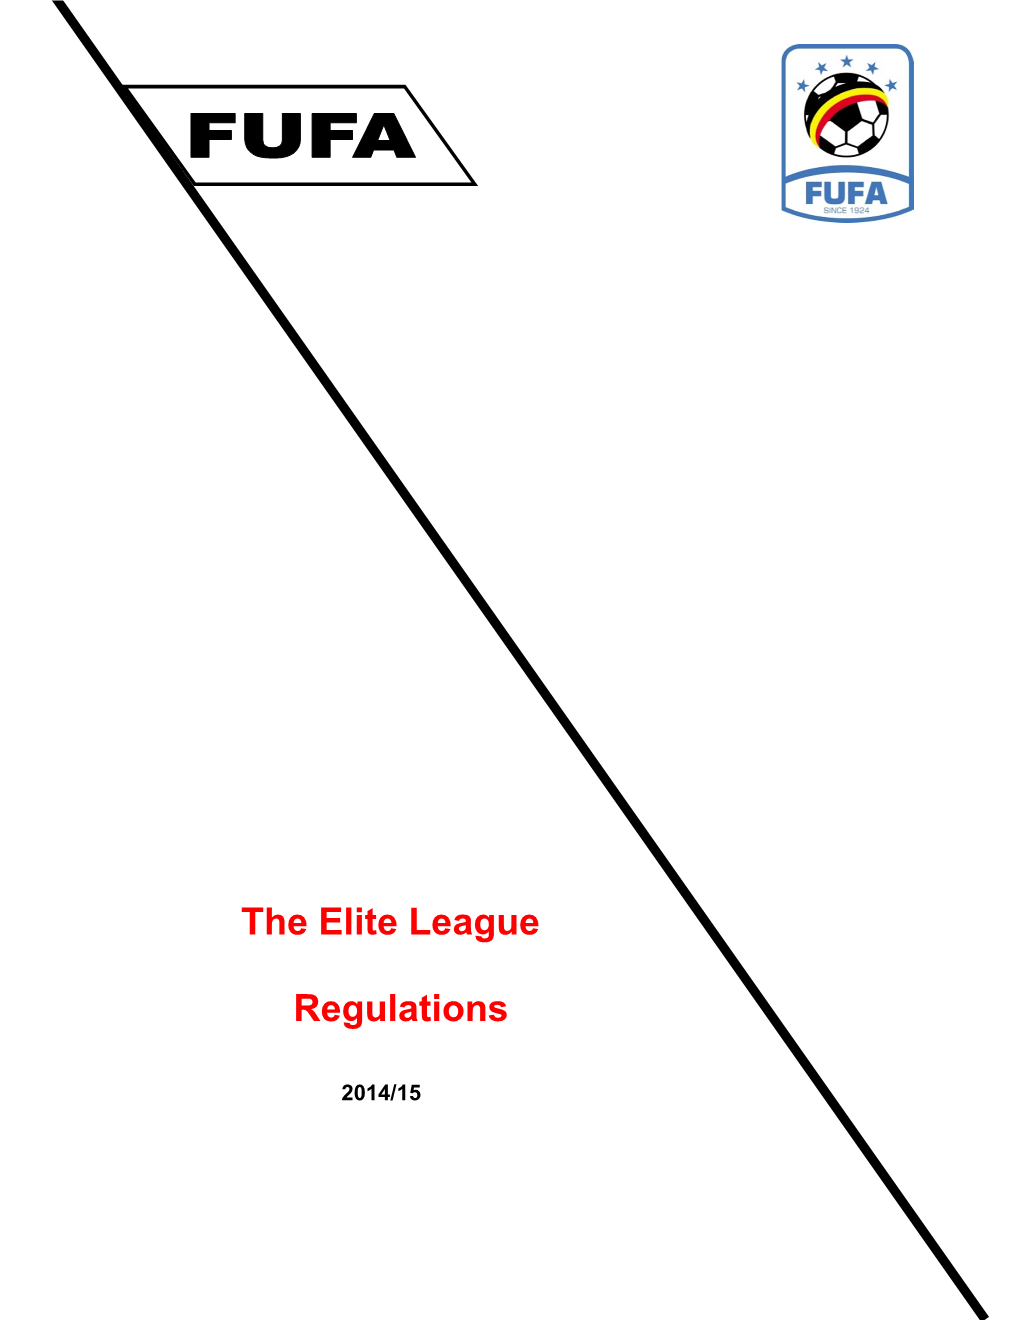 The Elite League Regulations